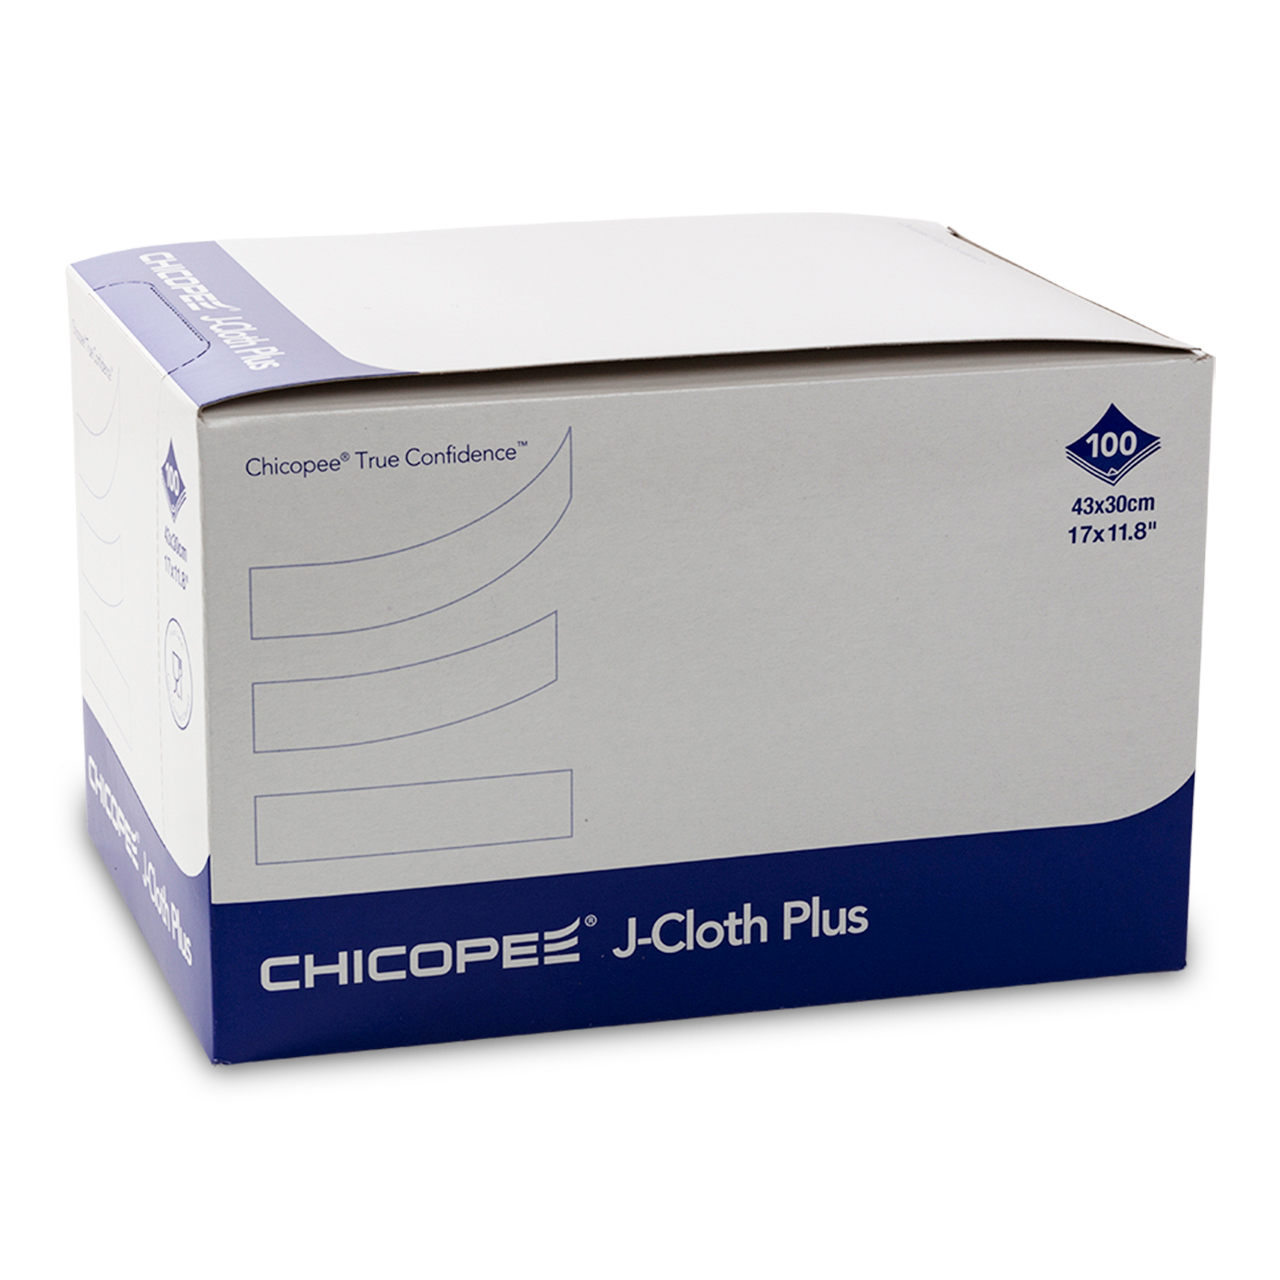 CHICOPEE® J-CLOTH PLUS